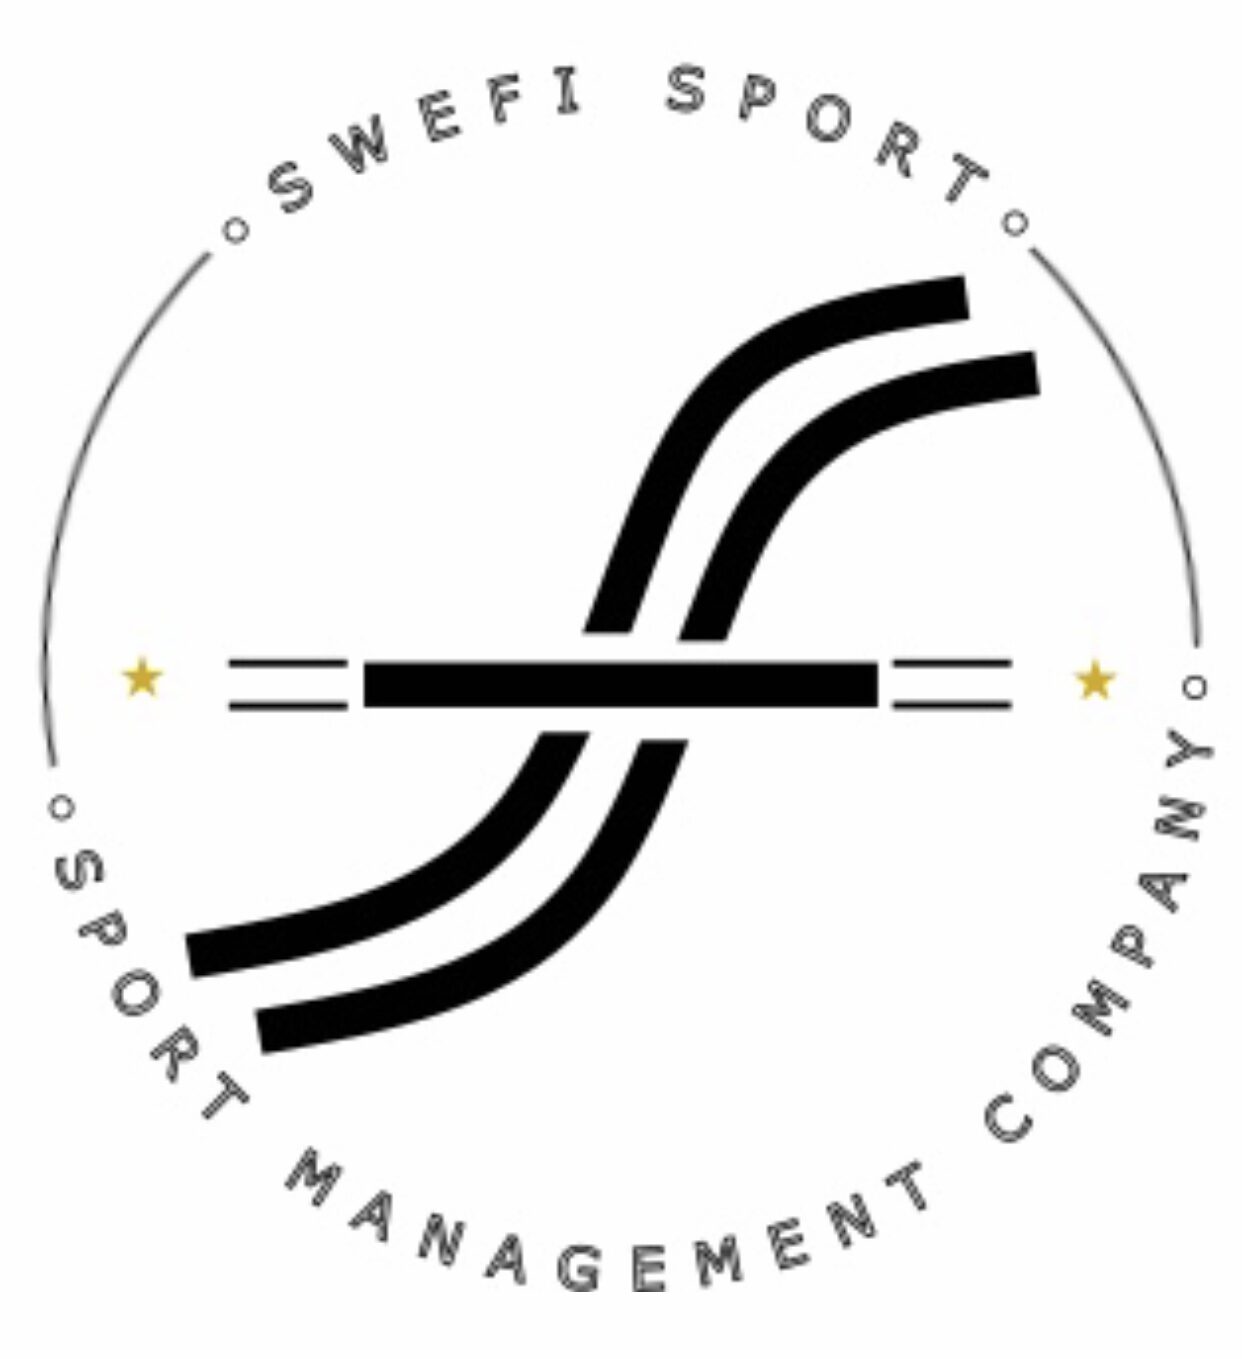 SWEFI SPORT Sport Management Company